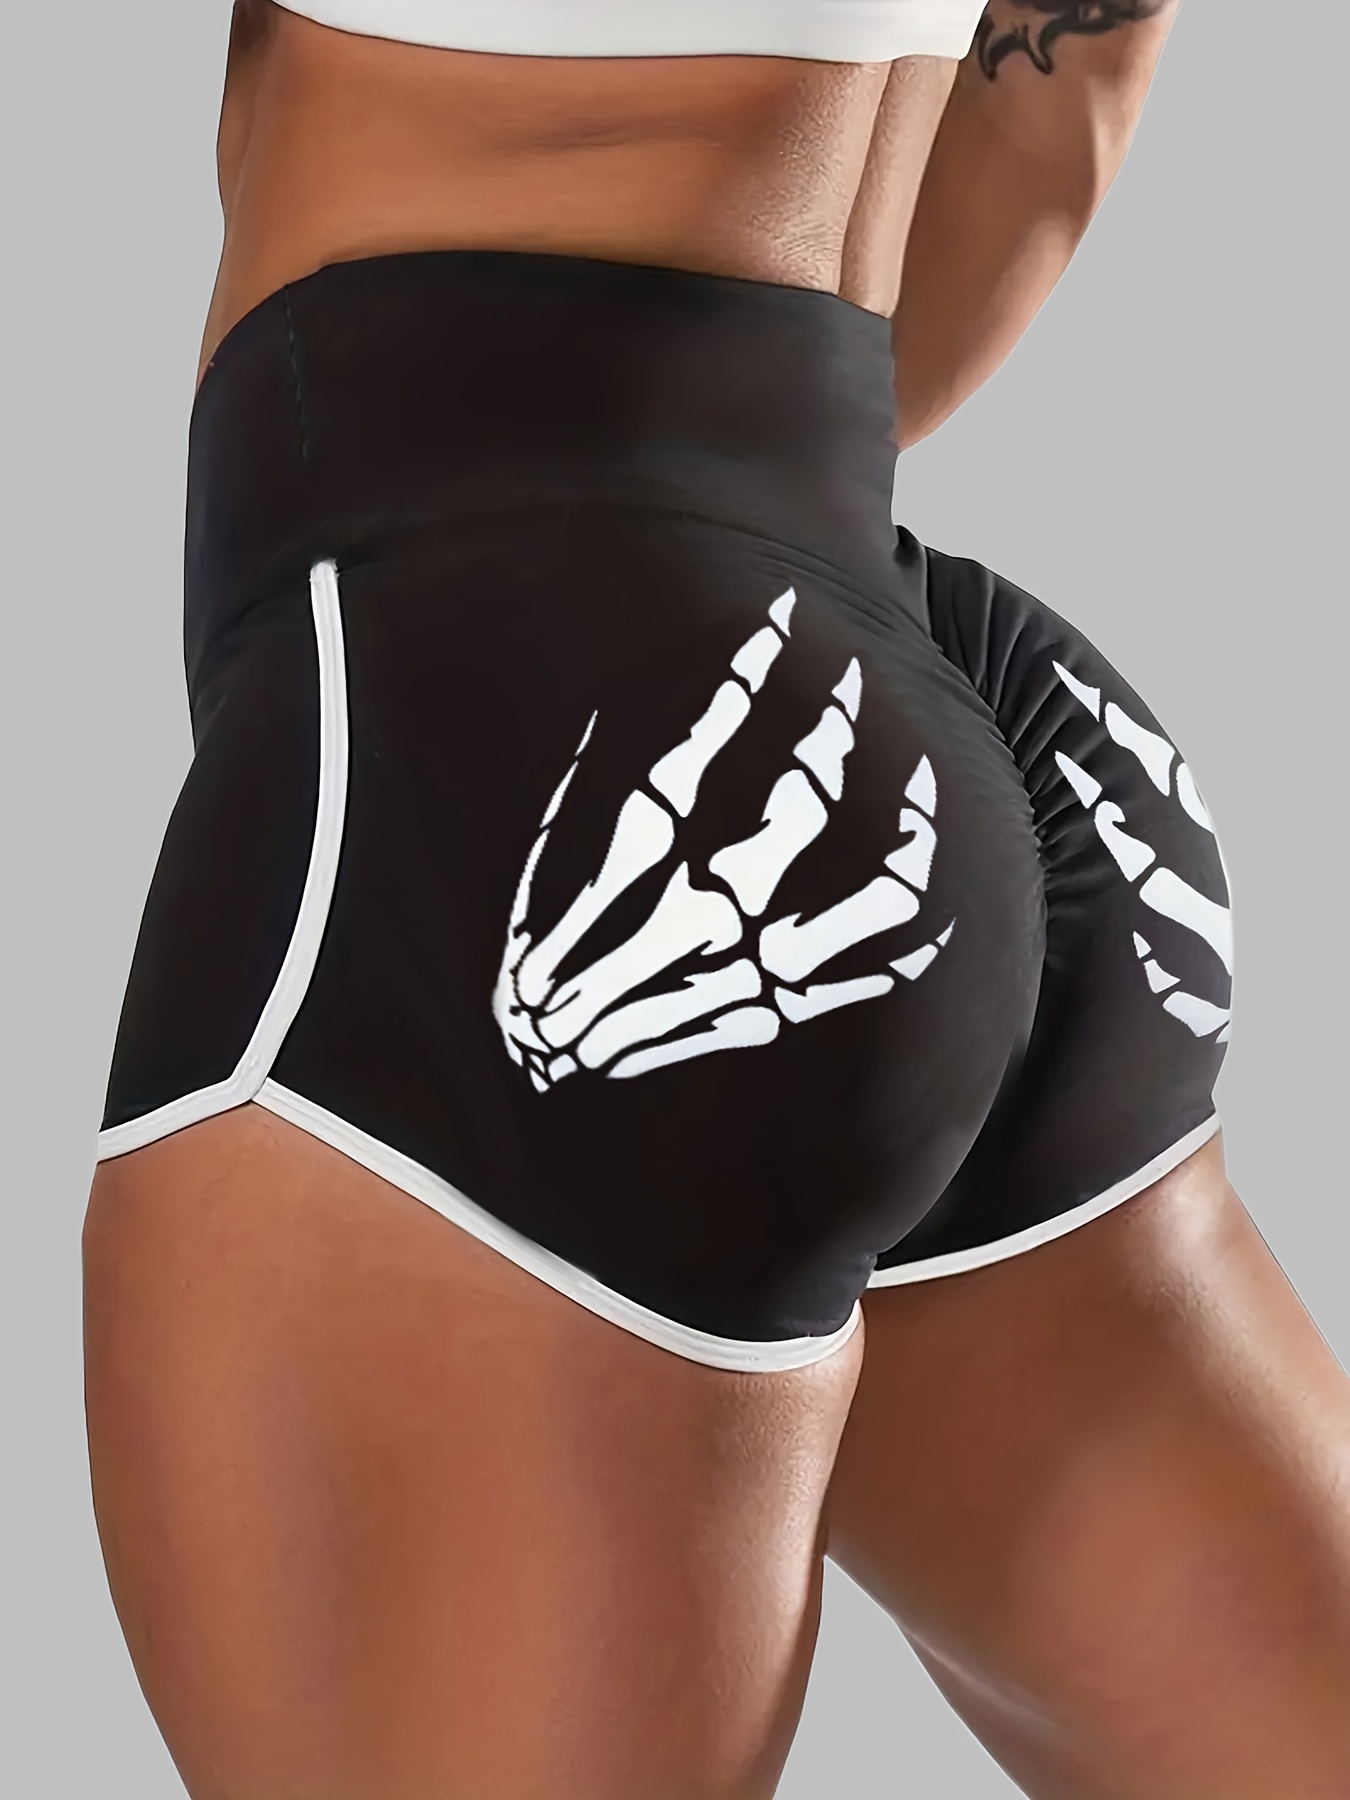 Women Summer Bottoms Bodycon Booty Shorts Hight Waist Swimming Sport Gym  Yoga Short Pants 